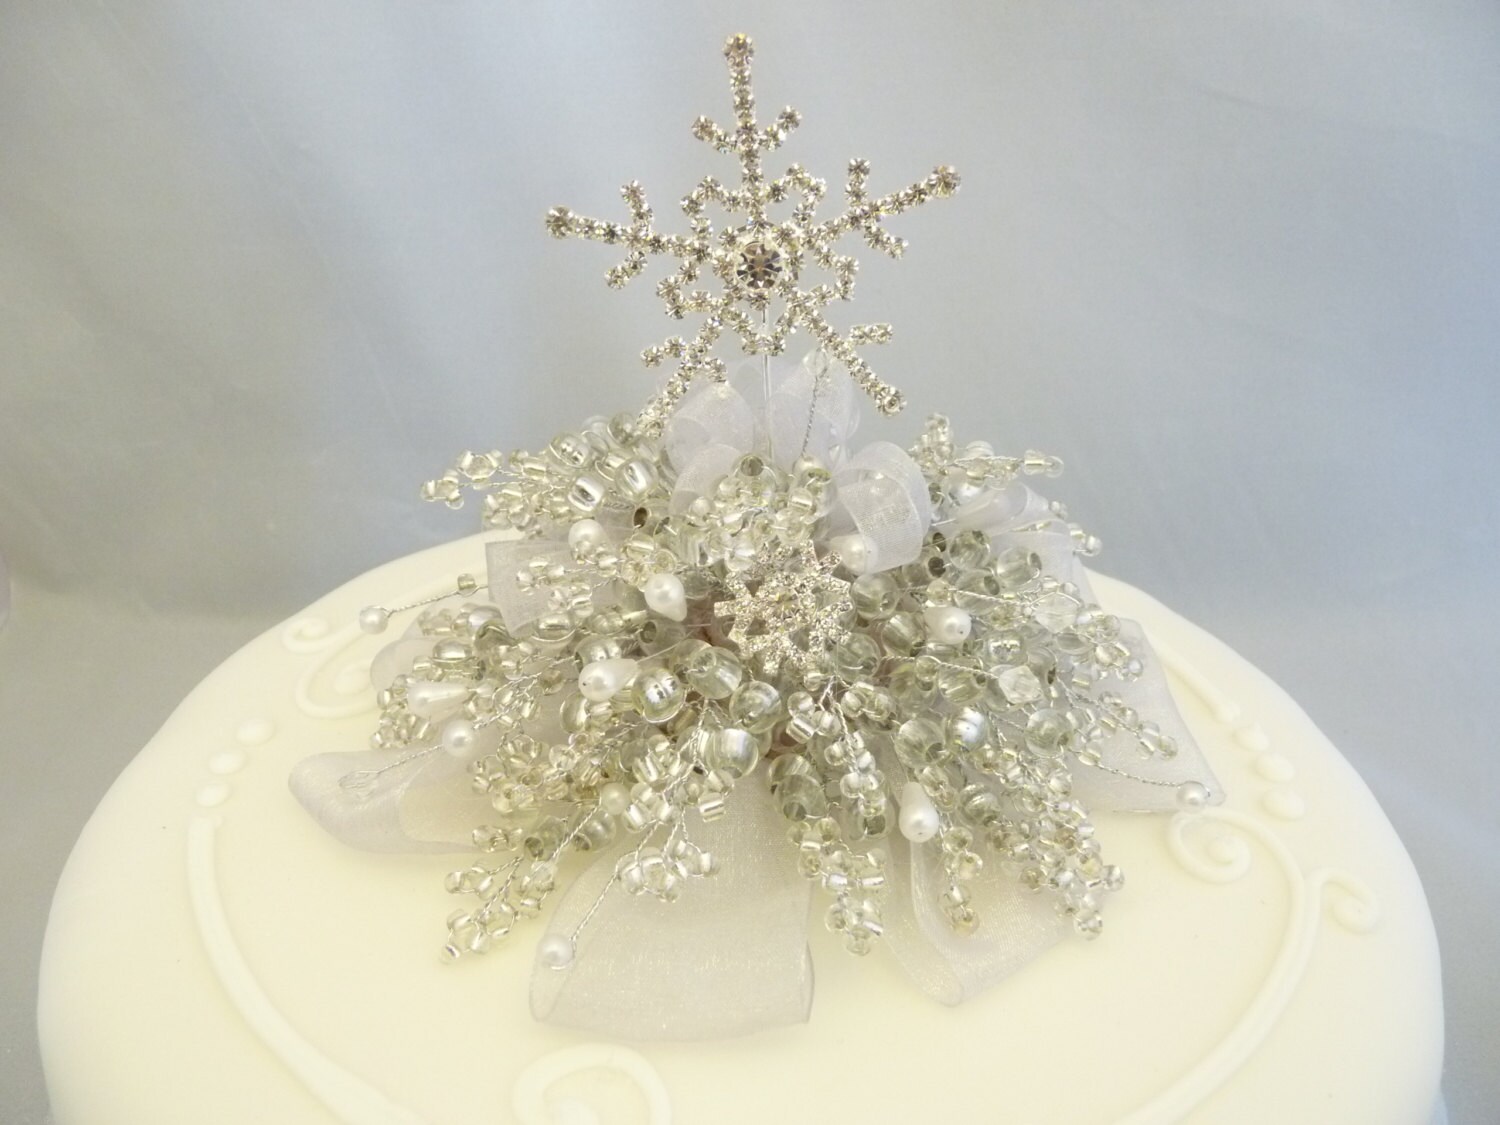 Snowflake cake decoration, Snowflake cake topper, Winter ...